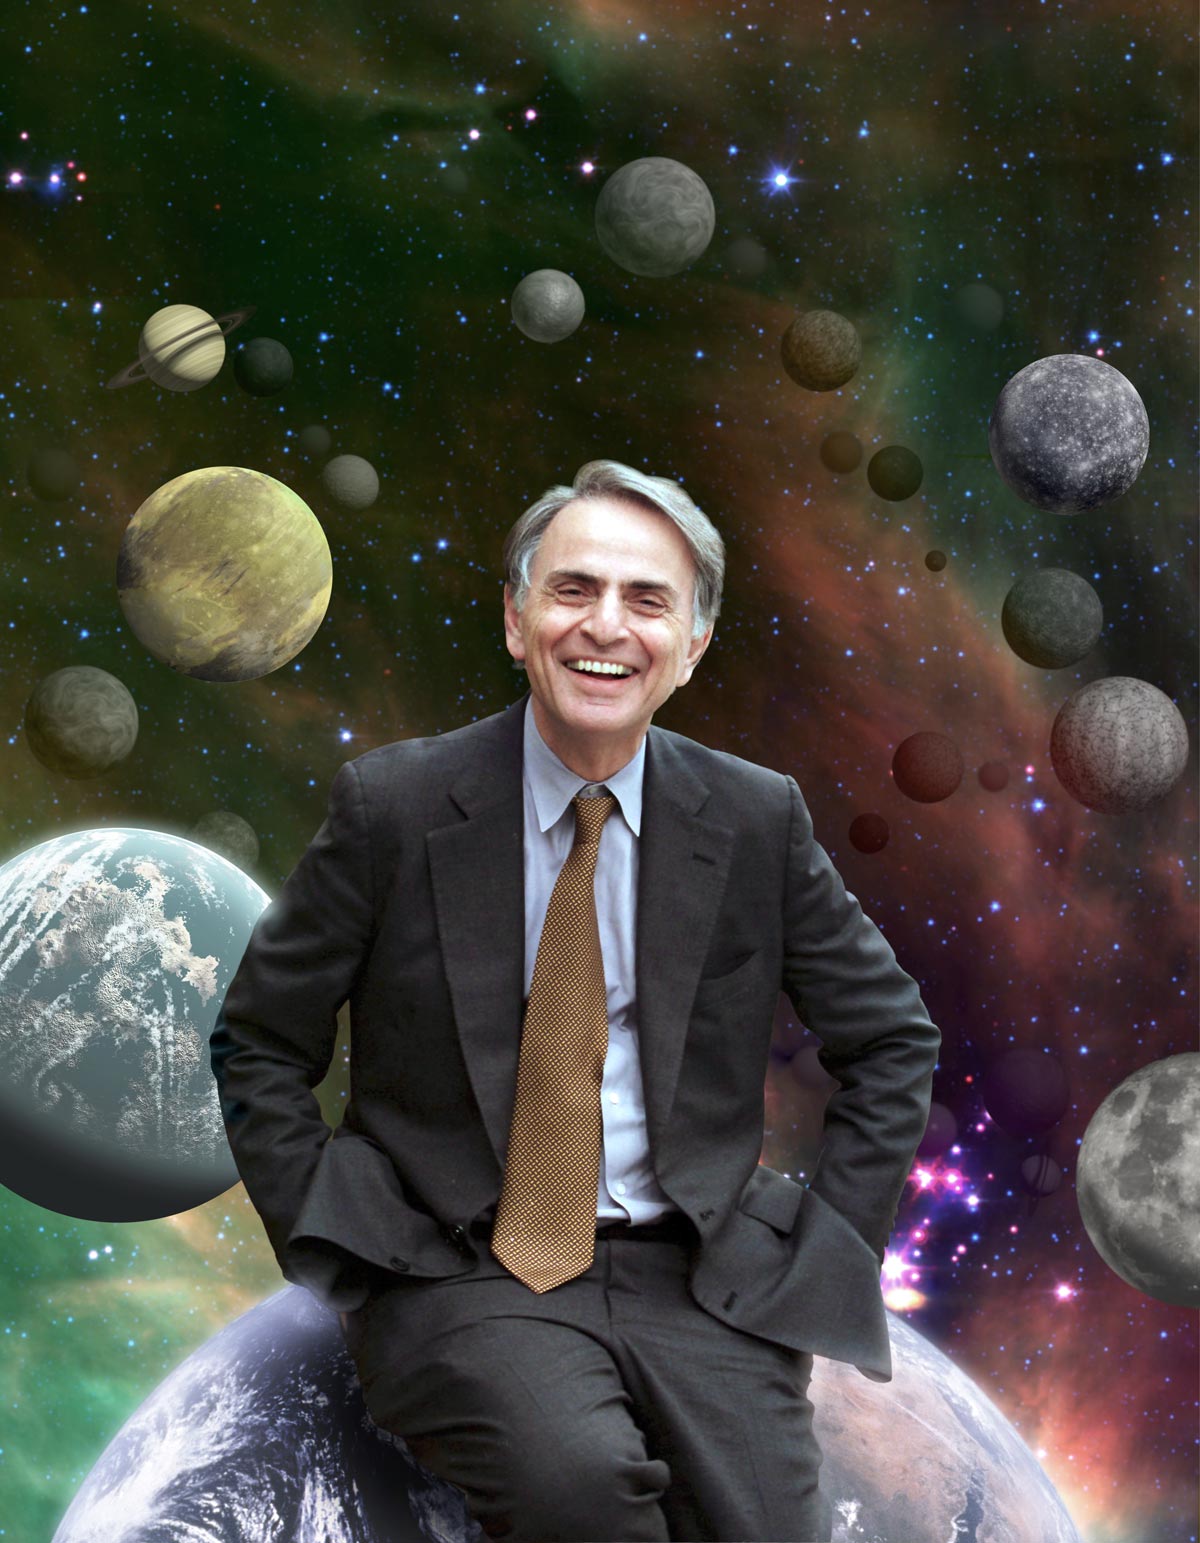 Carl Sagan portrayed leaning on Earth